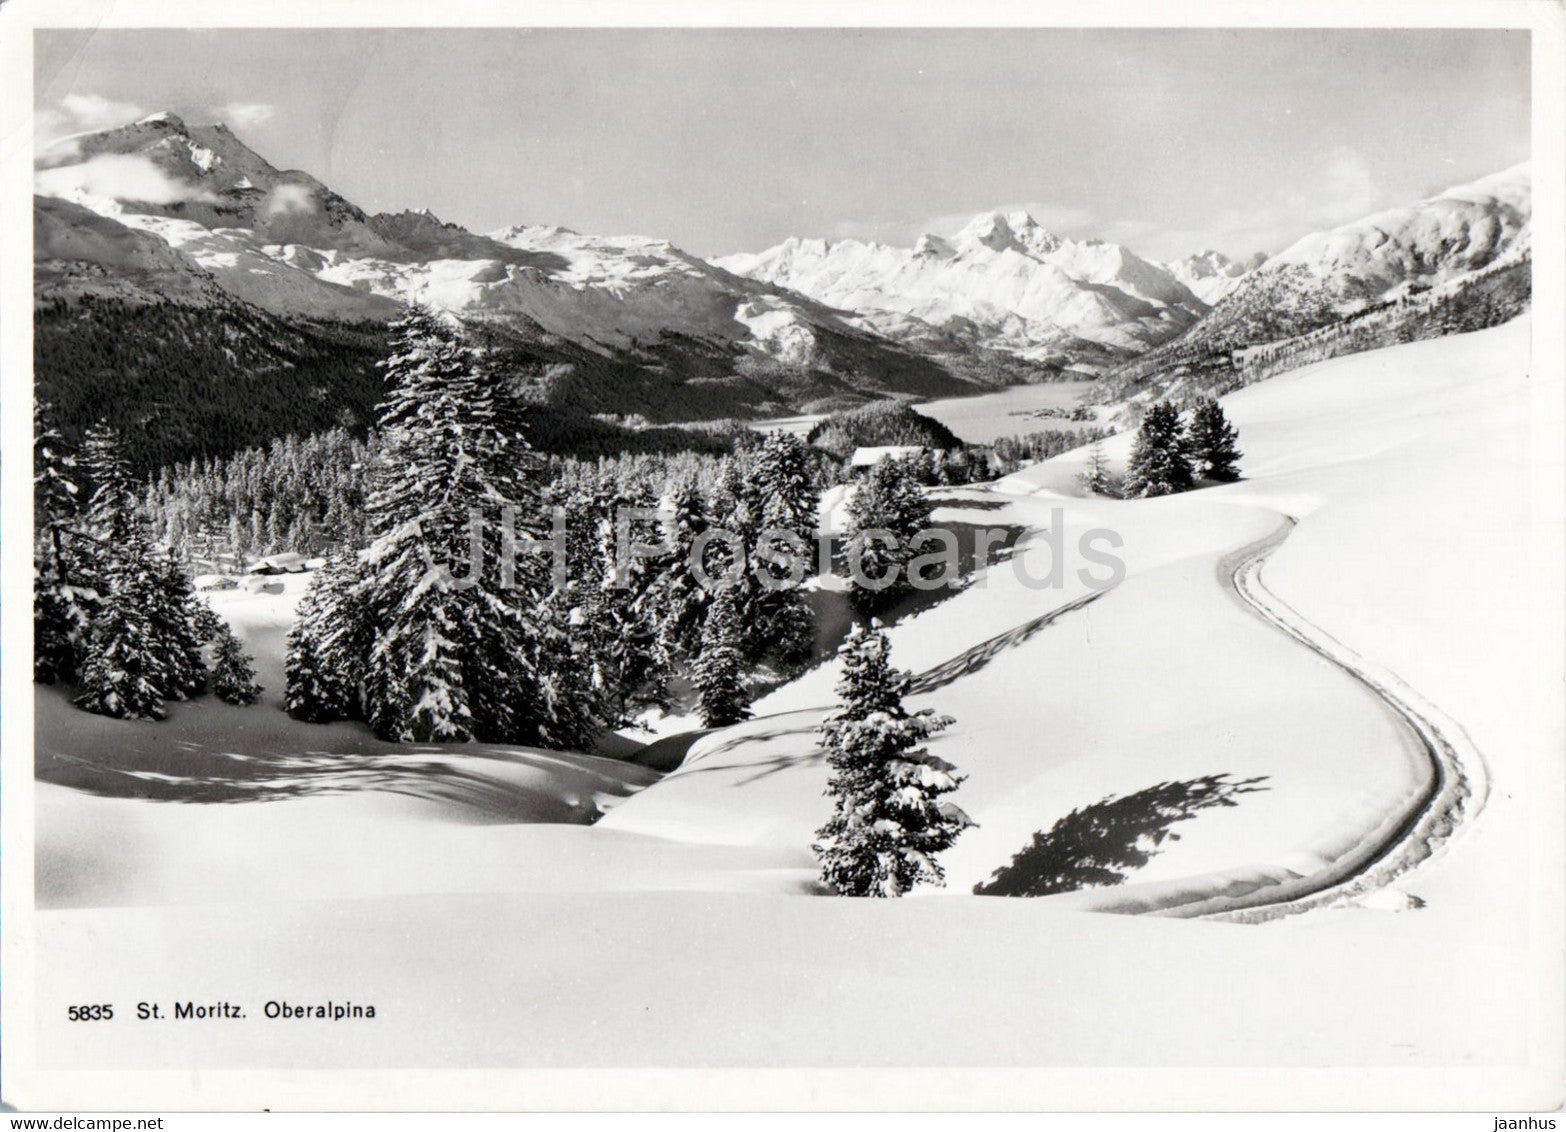 St Moritz - Oberalpina - 5835 - 1951 - old postcard - Switzerland - used - JH Postcards